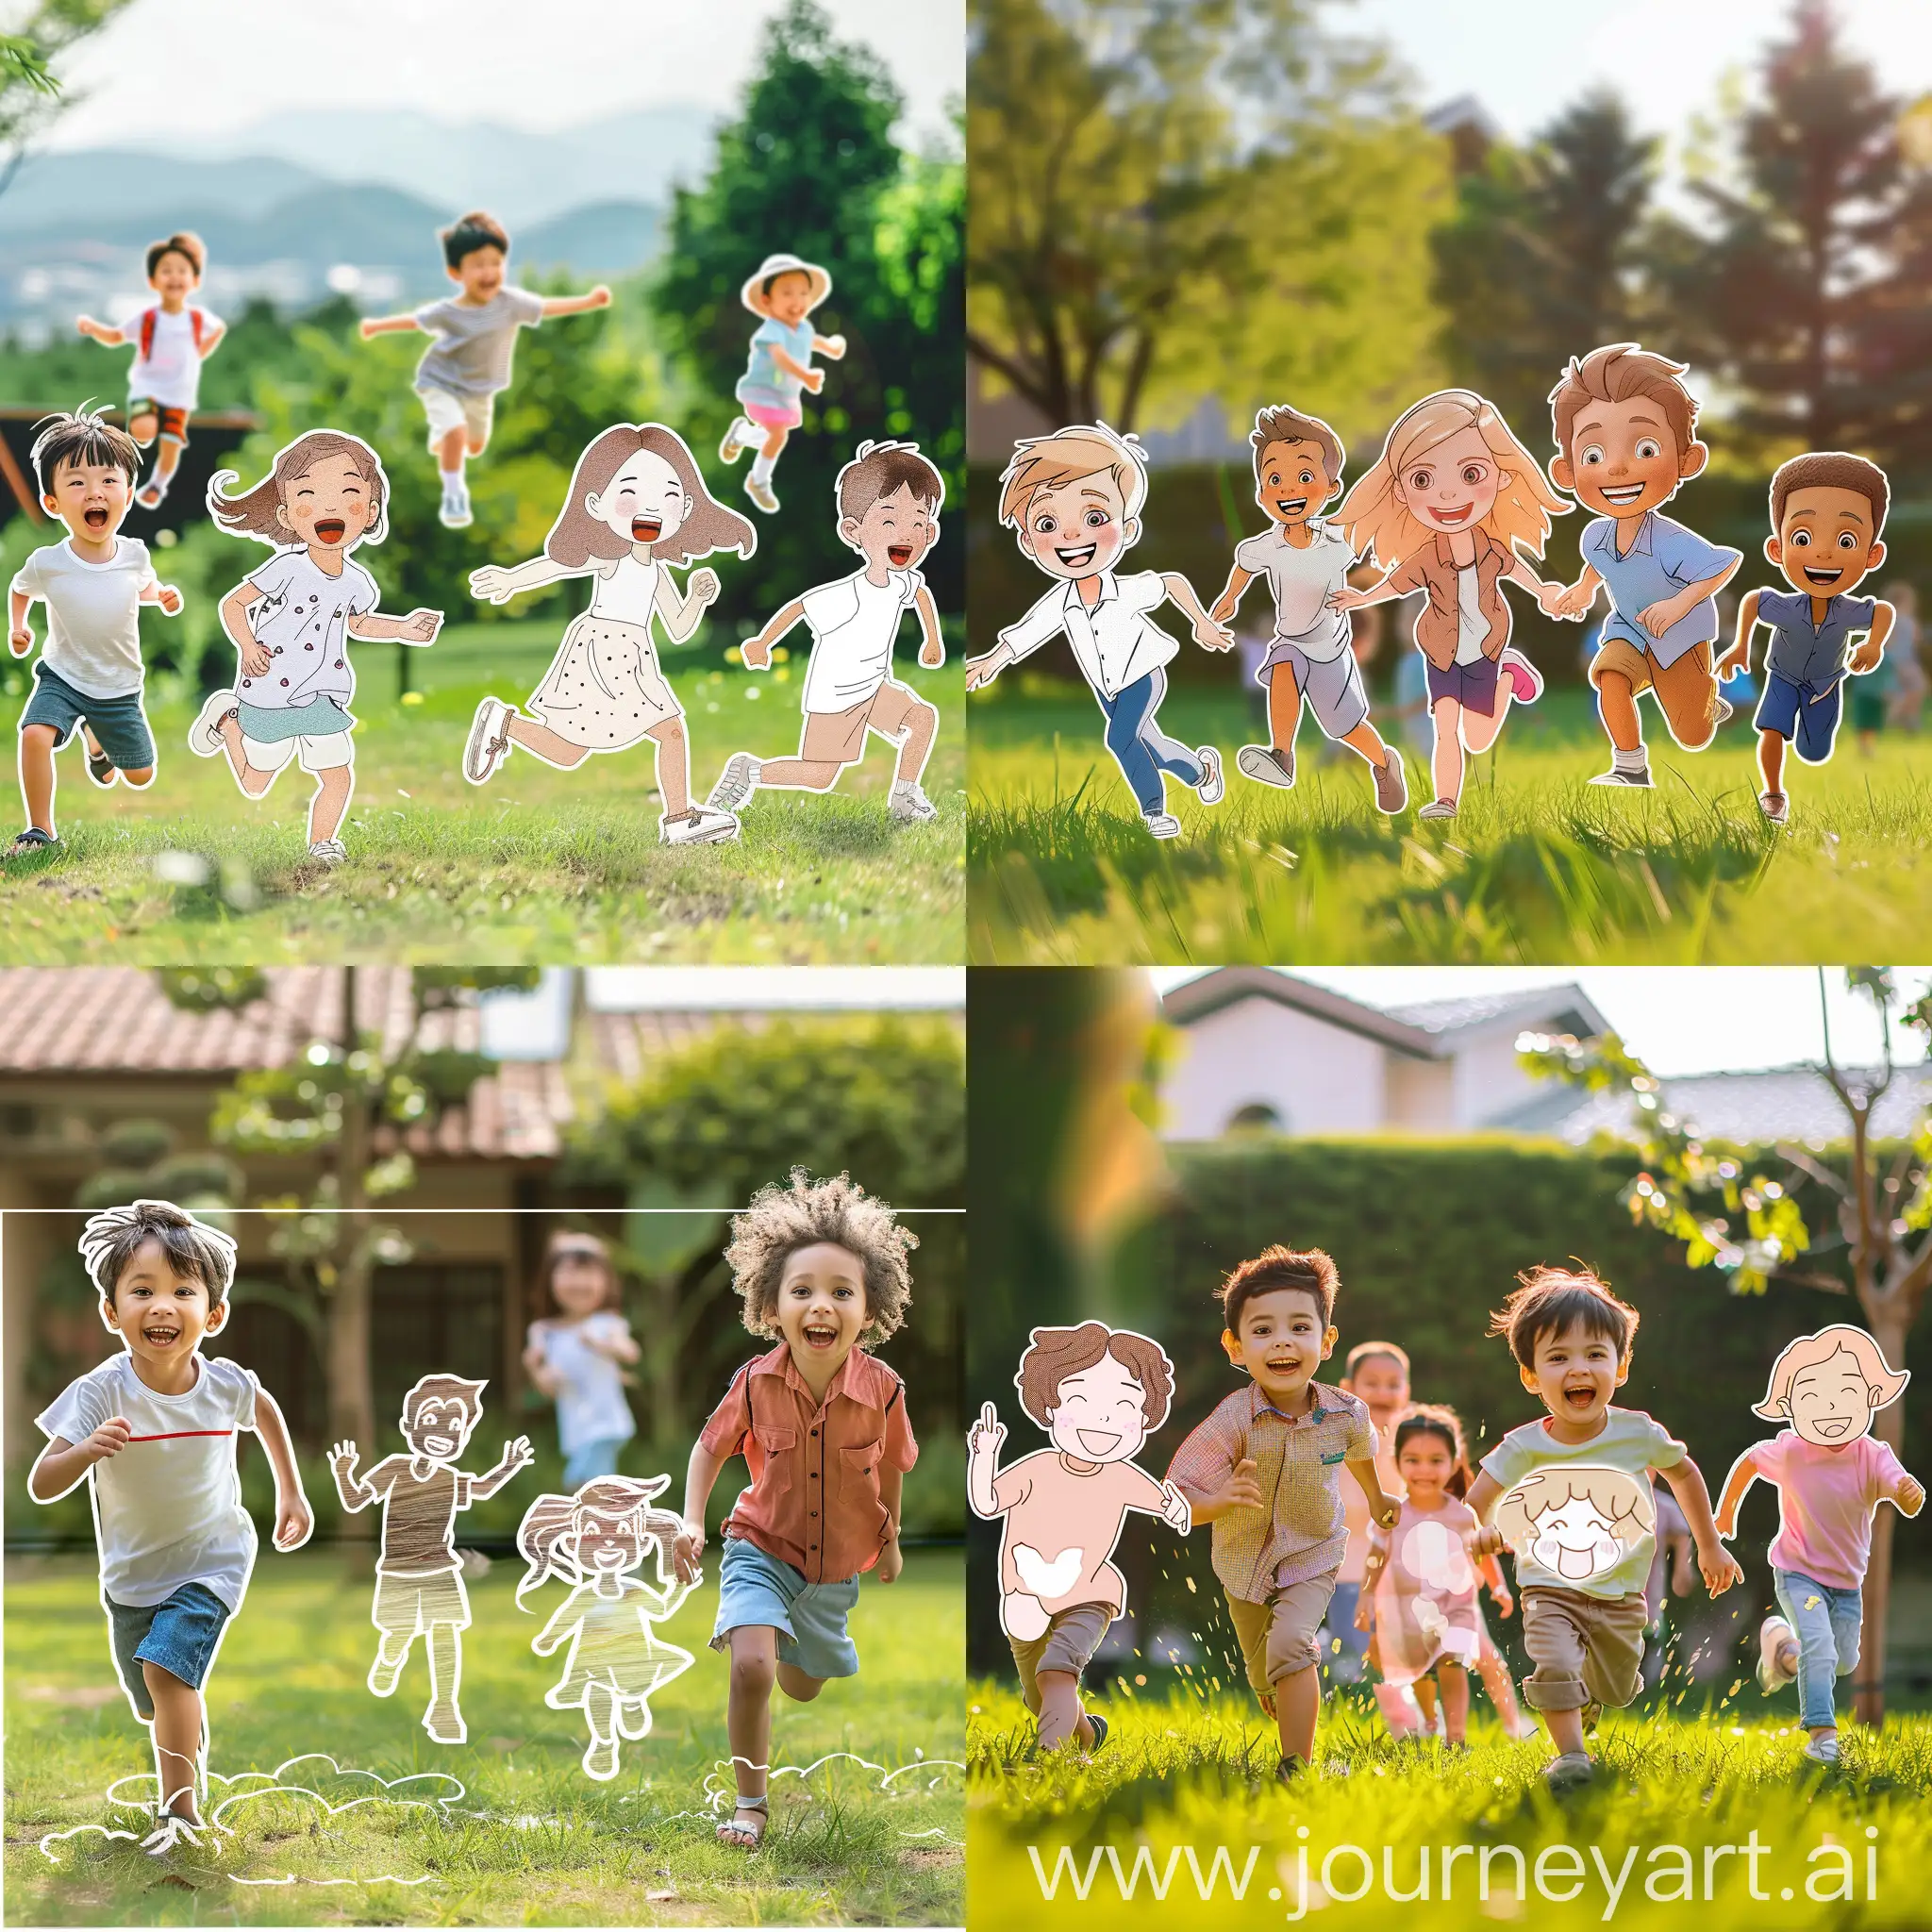 Joyful-Children-Playing-Outdoors-on-Grassy-Field